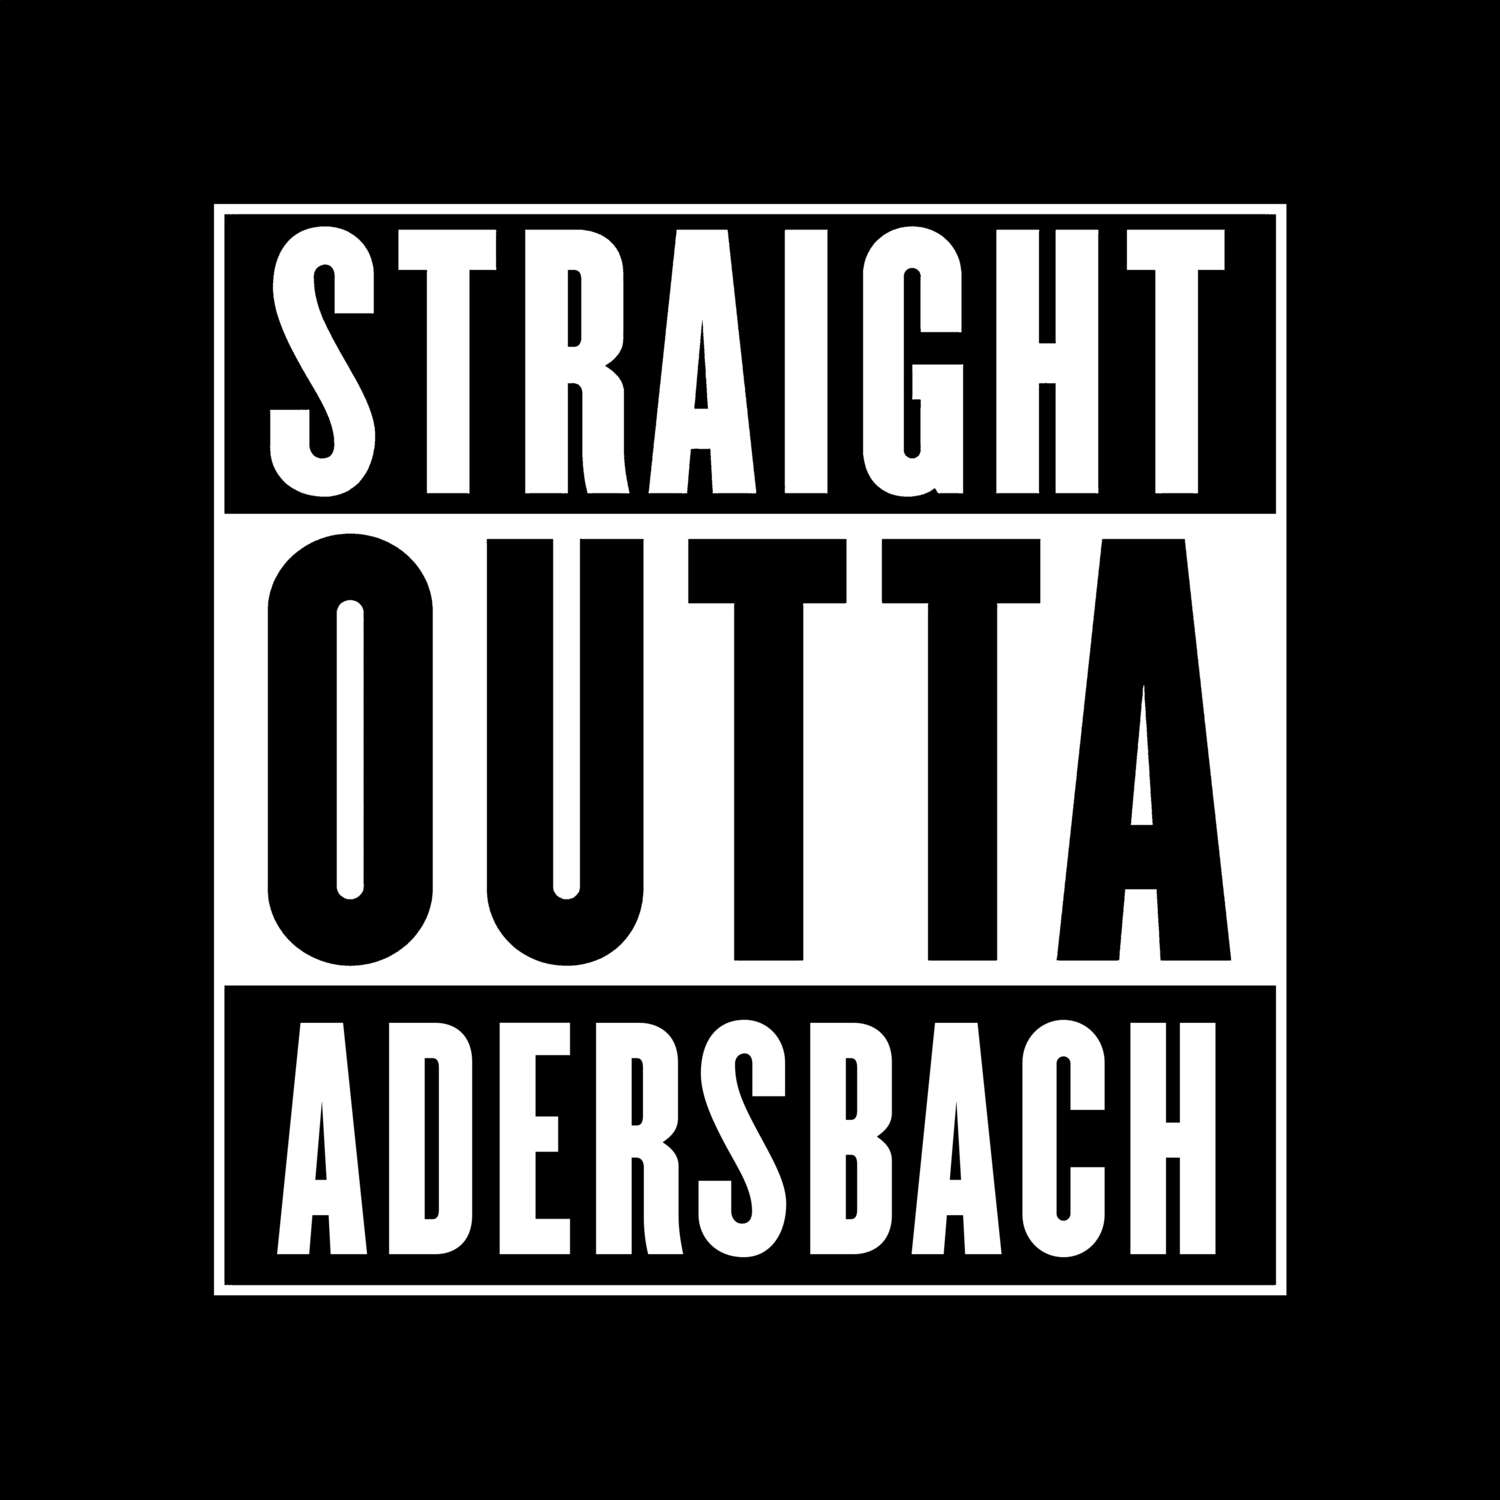 Adersbach T-Shirt »Straight Outta«